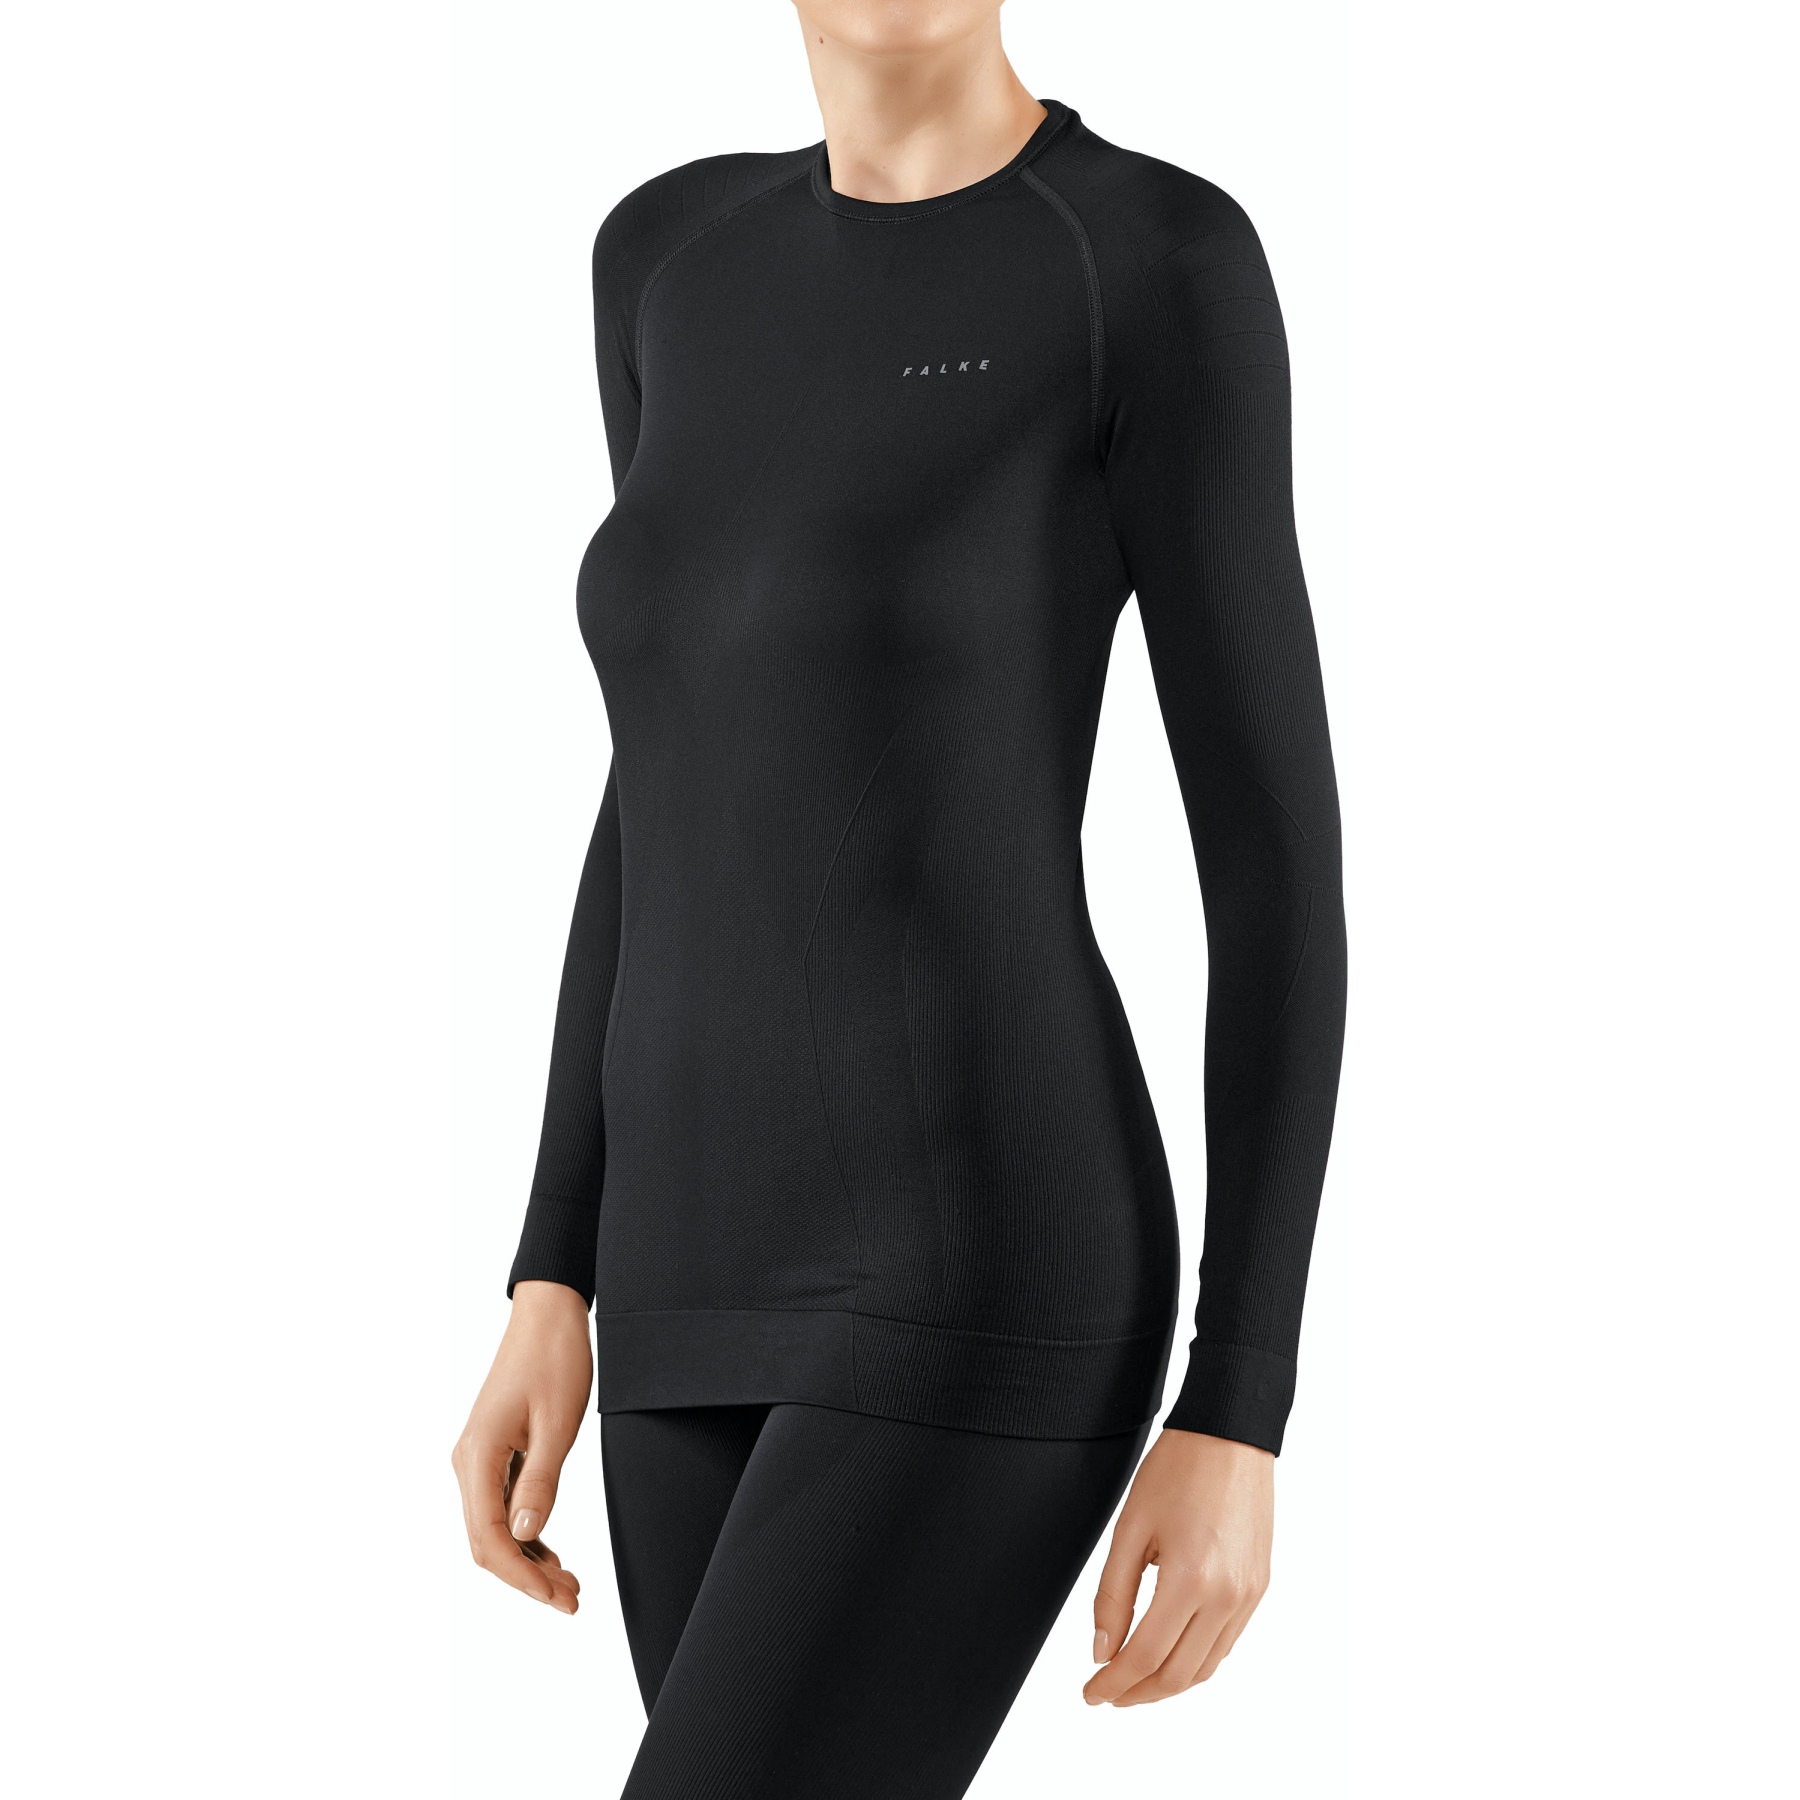 Produktbild von Falke Maximum Warm Langarmshirt Damen - schwarz 3000